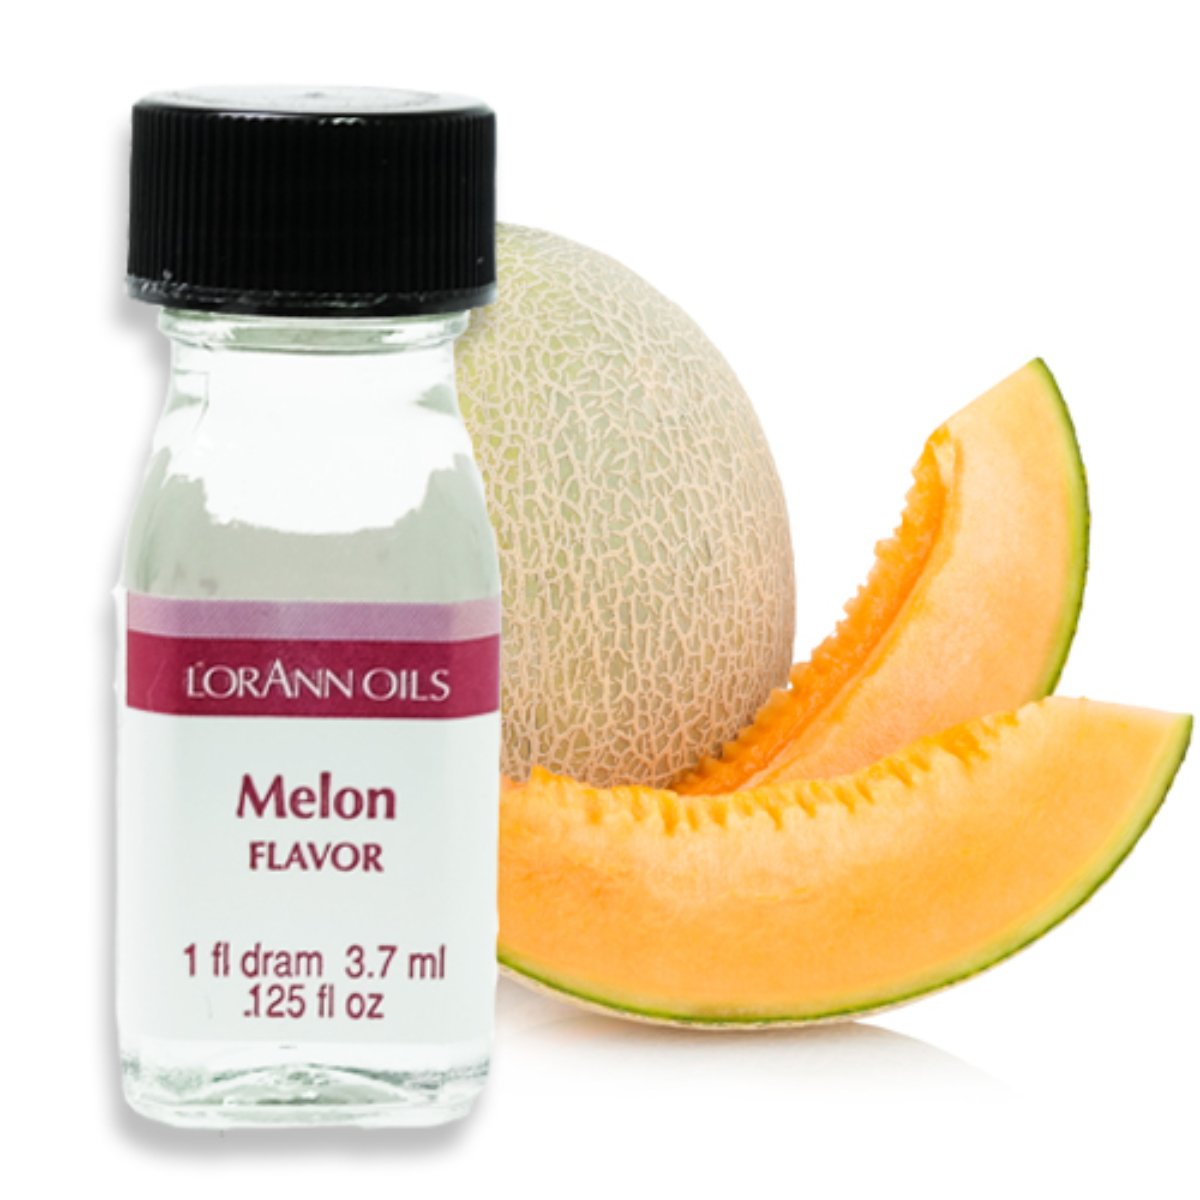 Melon Flavor 1 Dram - Bake Supply Plus